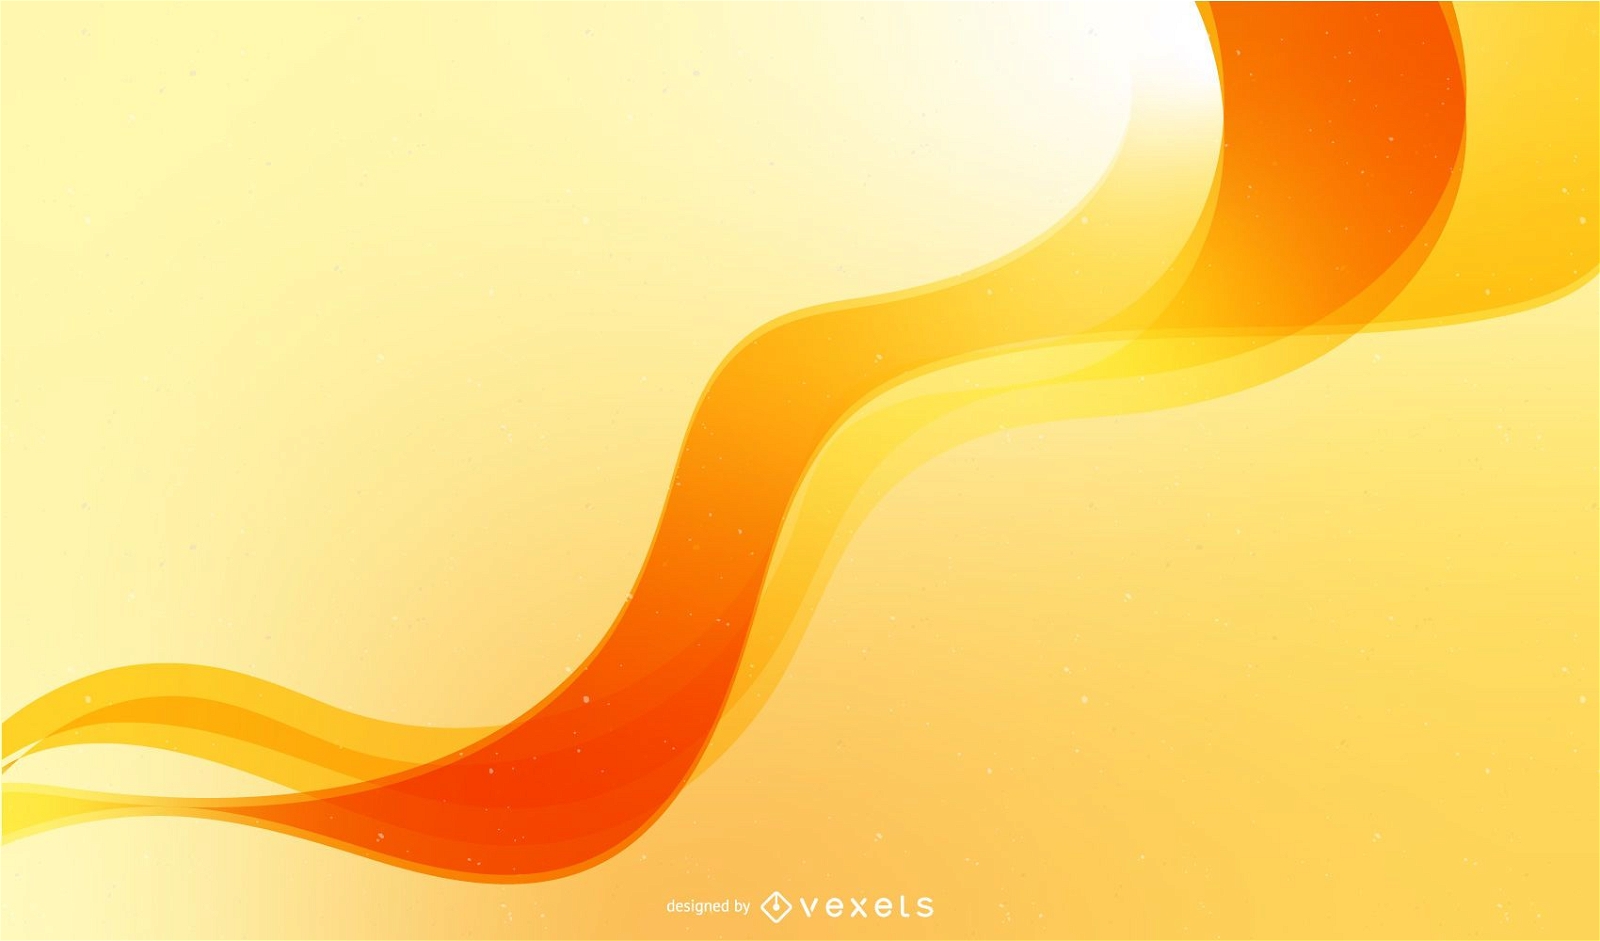 Desenho de cen?rio abstrato com onda laranja